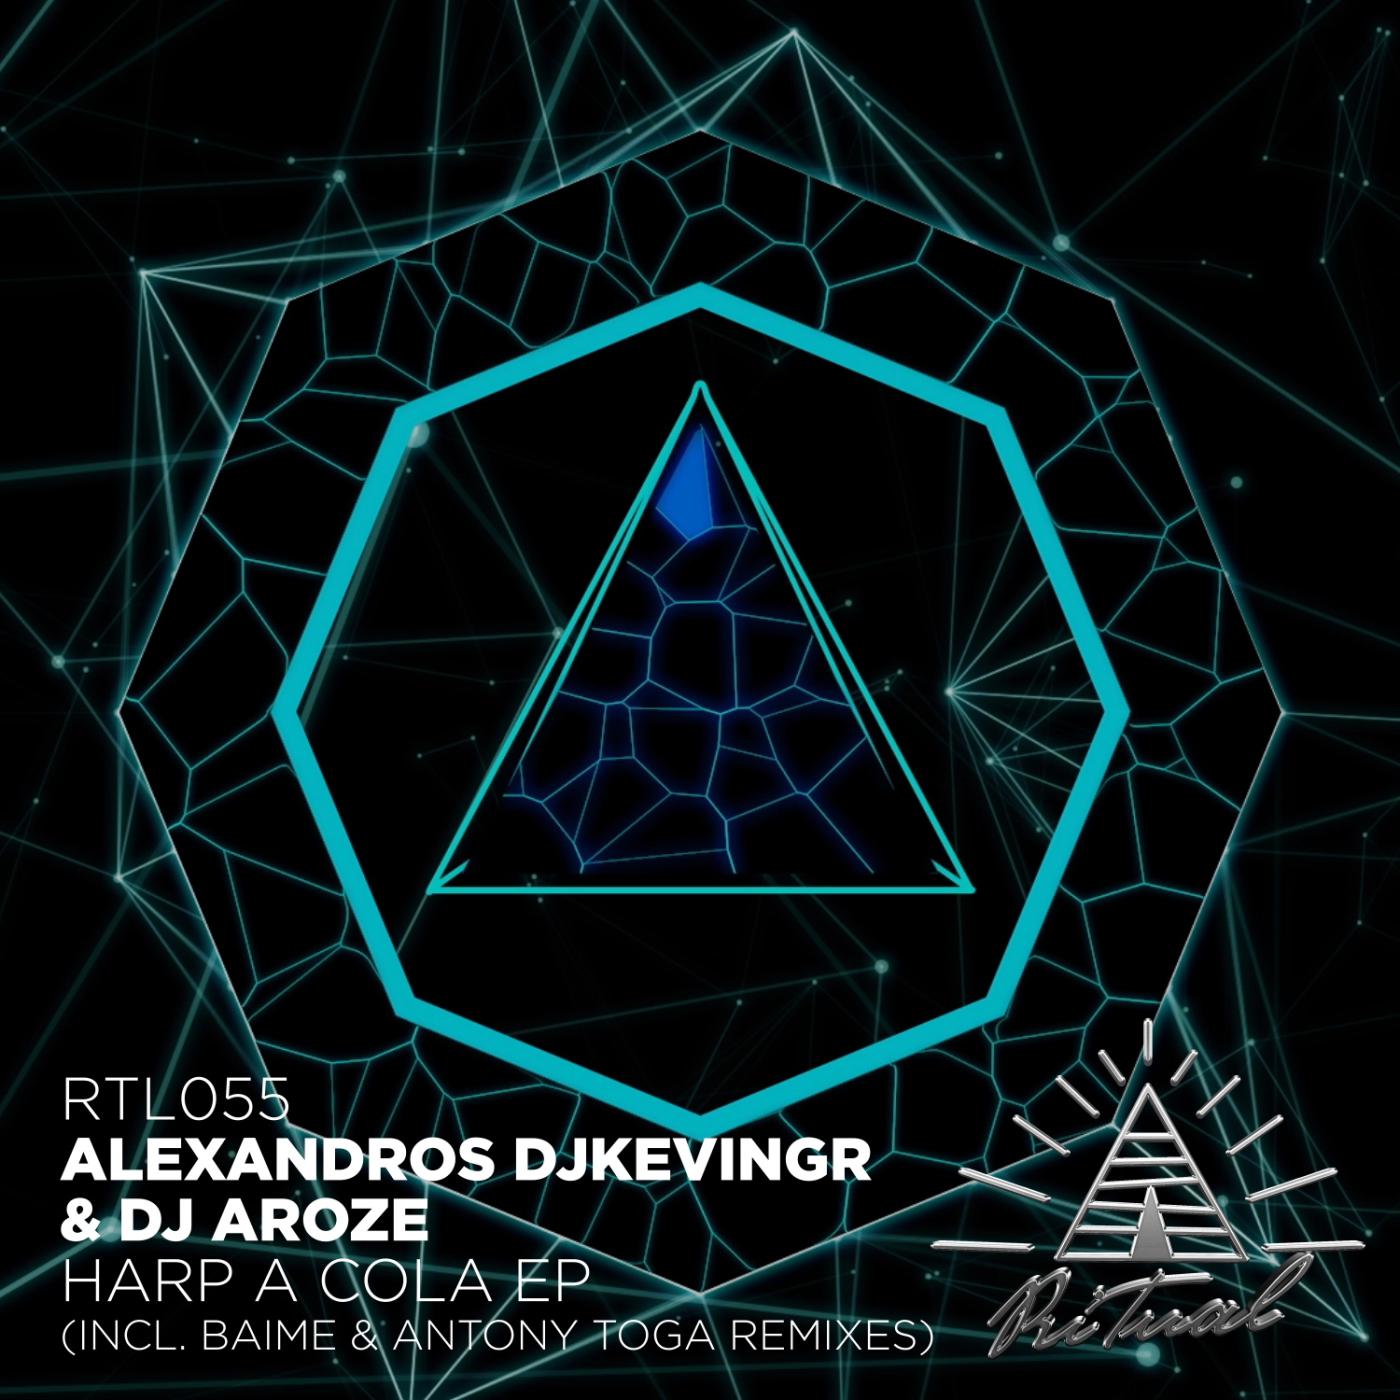 Alexandros Djkevingr - Evolution Always Wins (Antony Toga Remix)